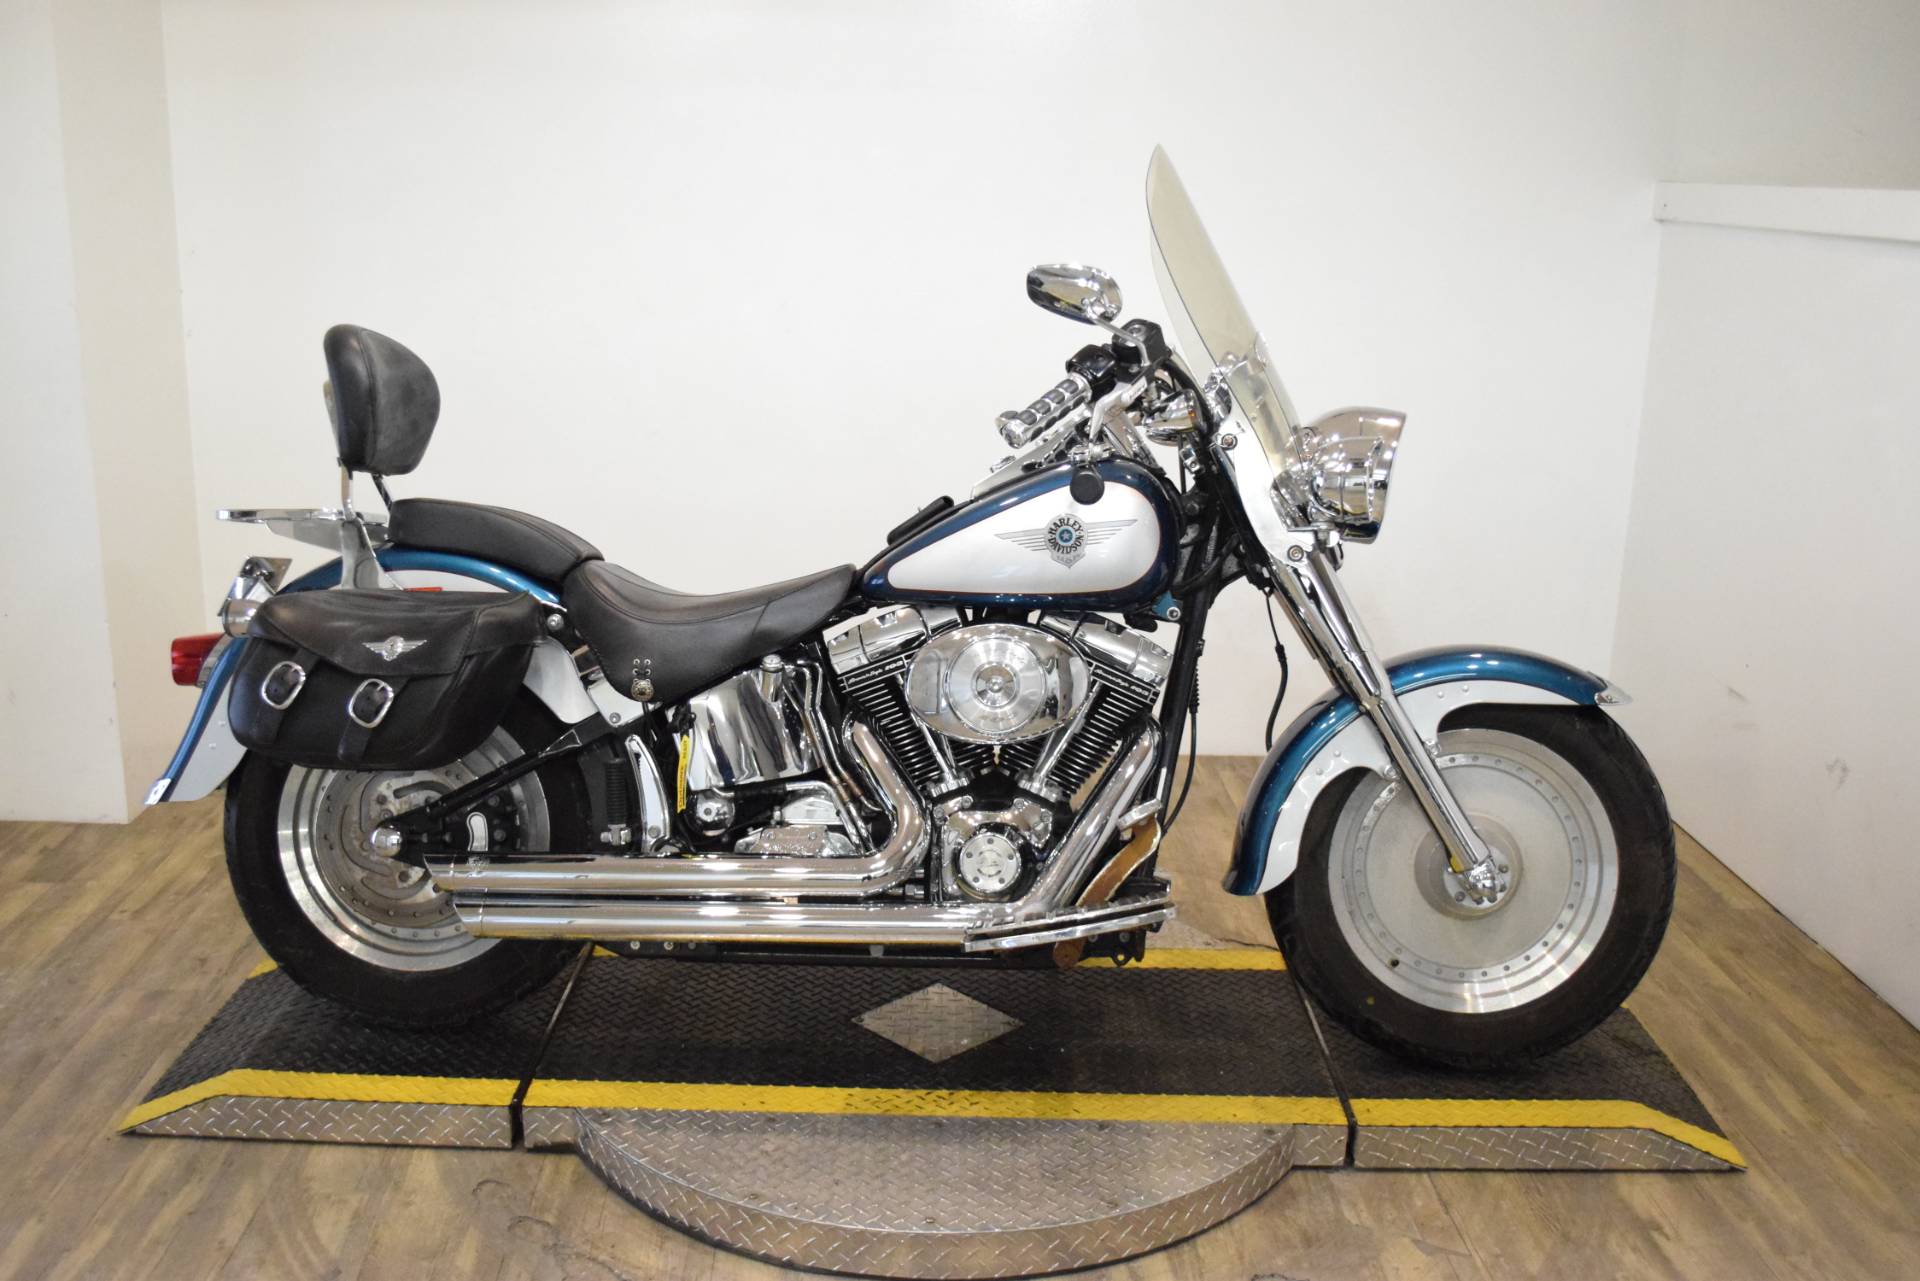 2004 Harley Davidson Flstf Flstfi Fat Boy Used Motorcycle For Sale Wauconda Illinois